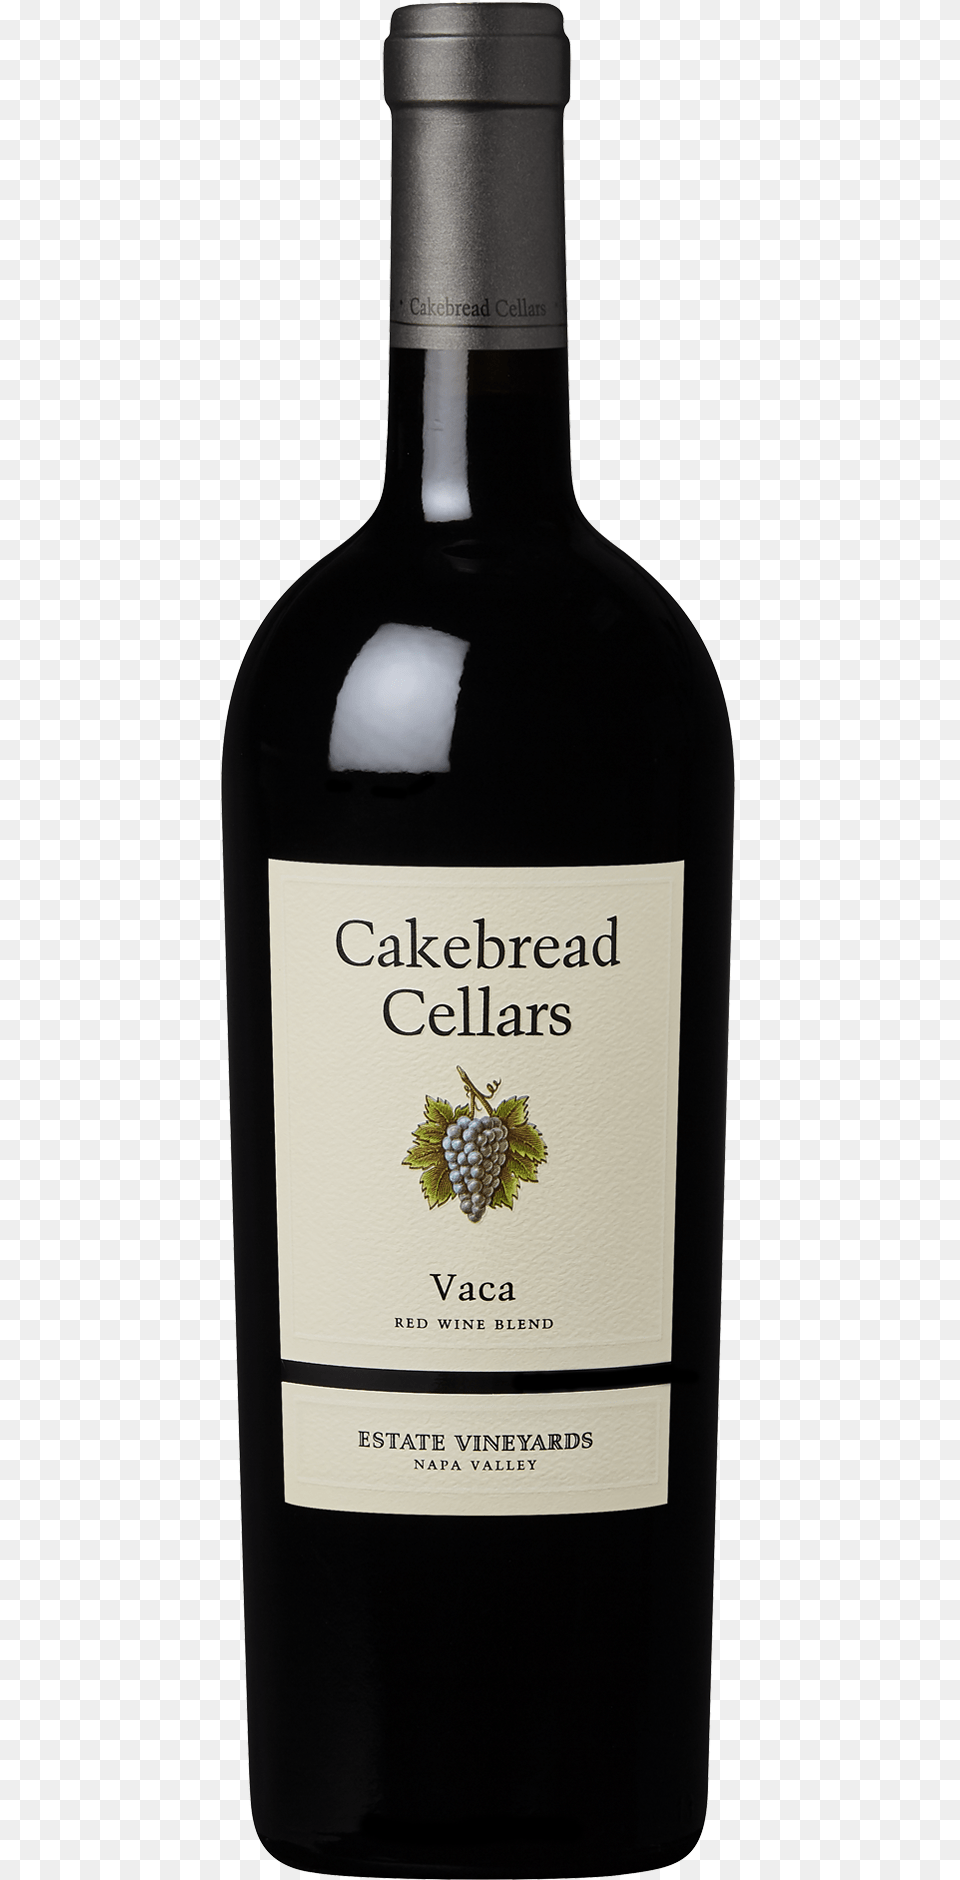 Cakebread Cellars Vaca Napa Valley Bottle Shot Wine Bottle, Alcohol, Beverage, Liquor, Wine Bottle Png Image